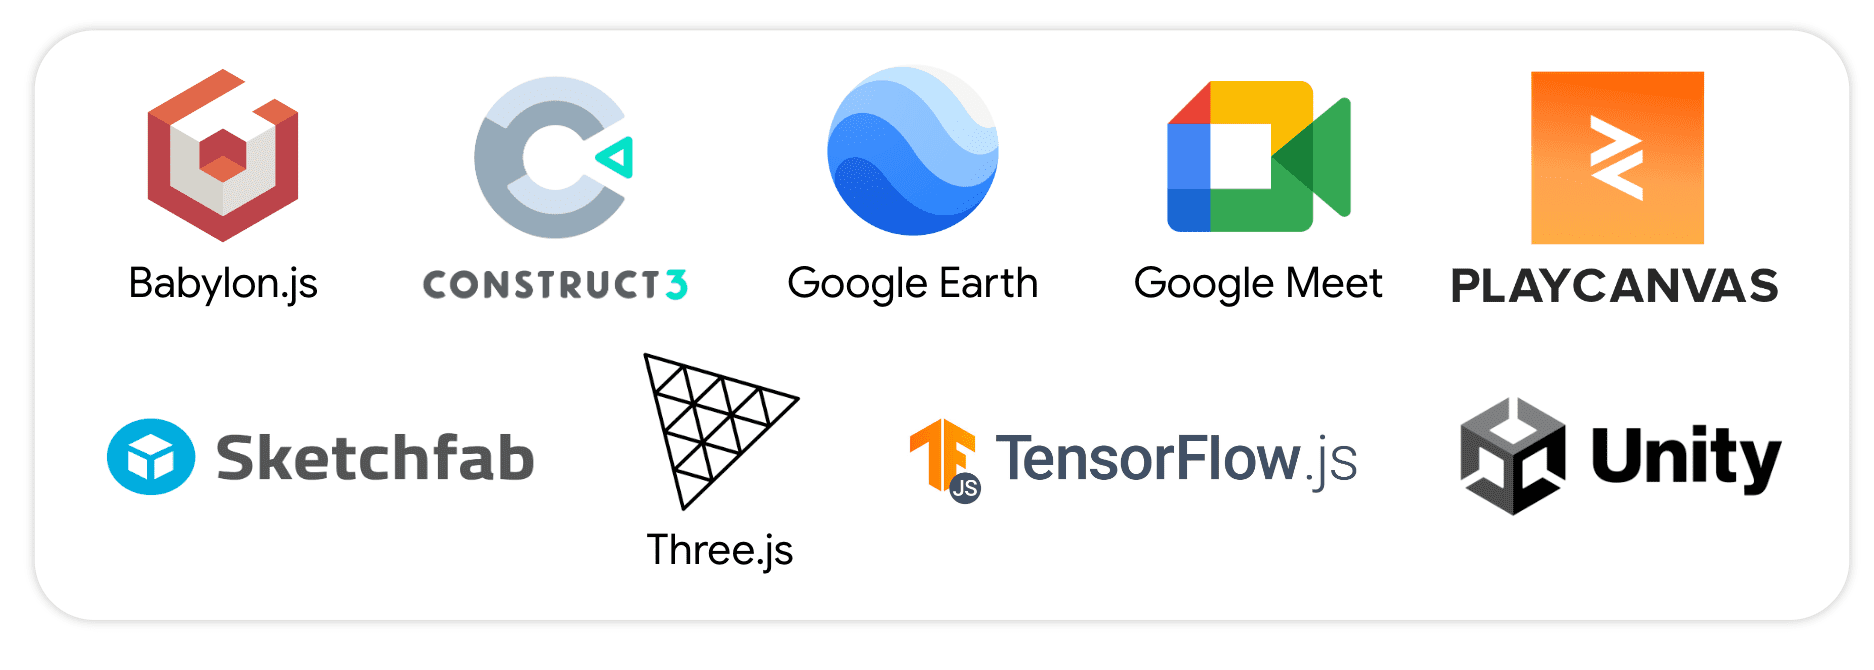 Babylon.js, Construct 3, Google Earth, Google Meet, PlayCanvas, Sketchfab, Three.JS, TensorFlow.js i Unity.